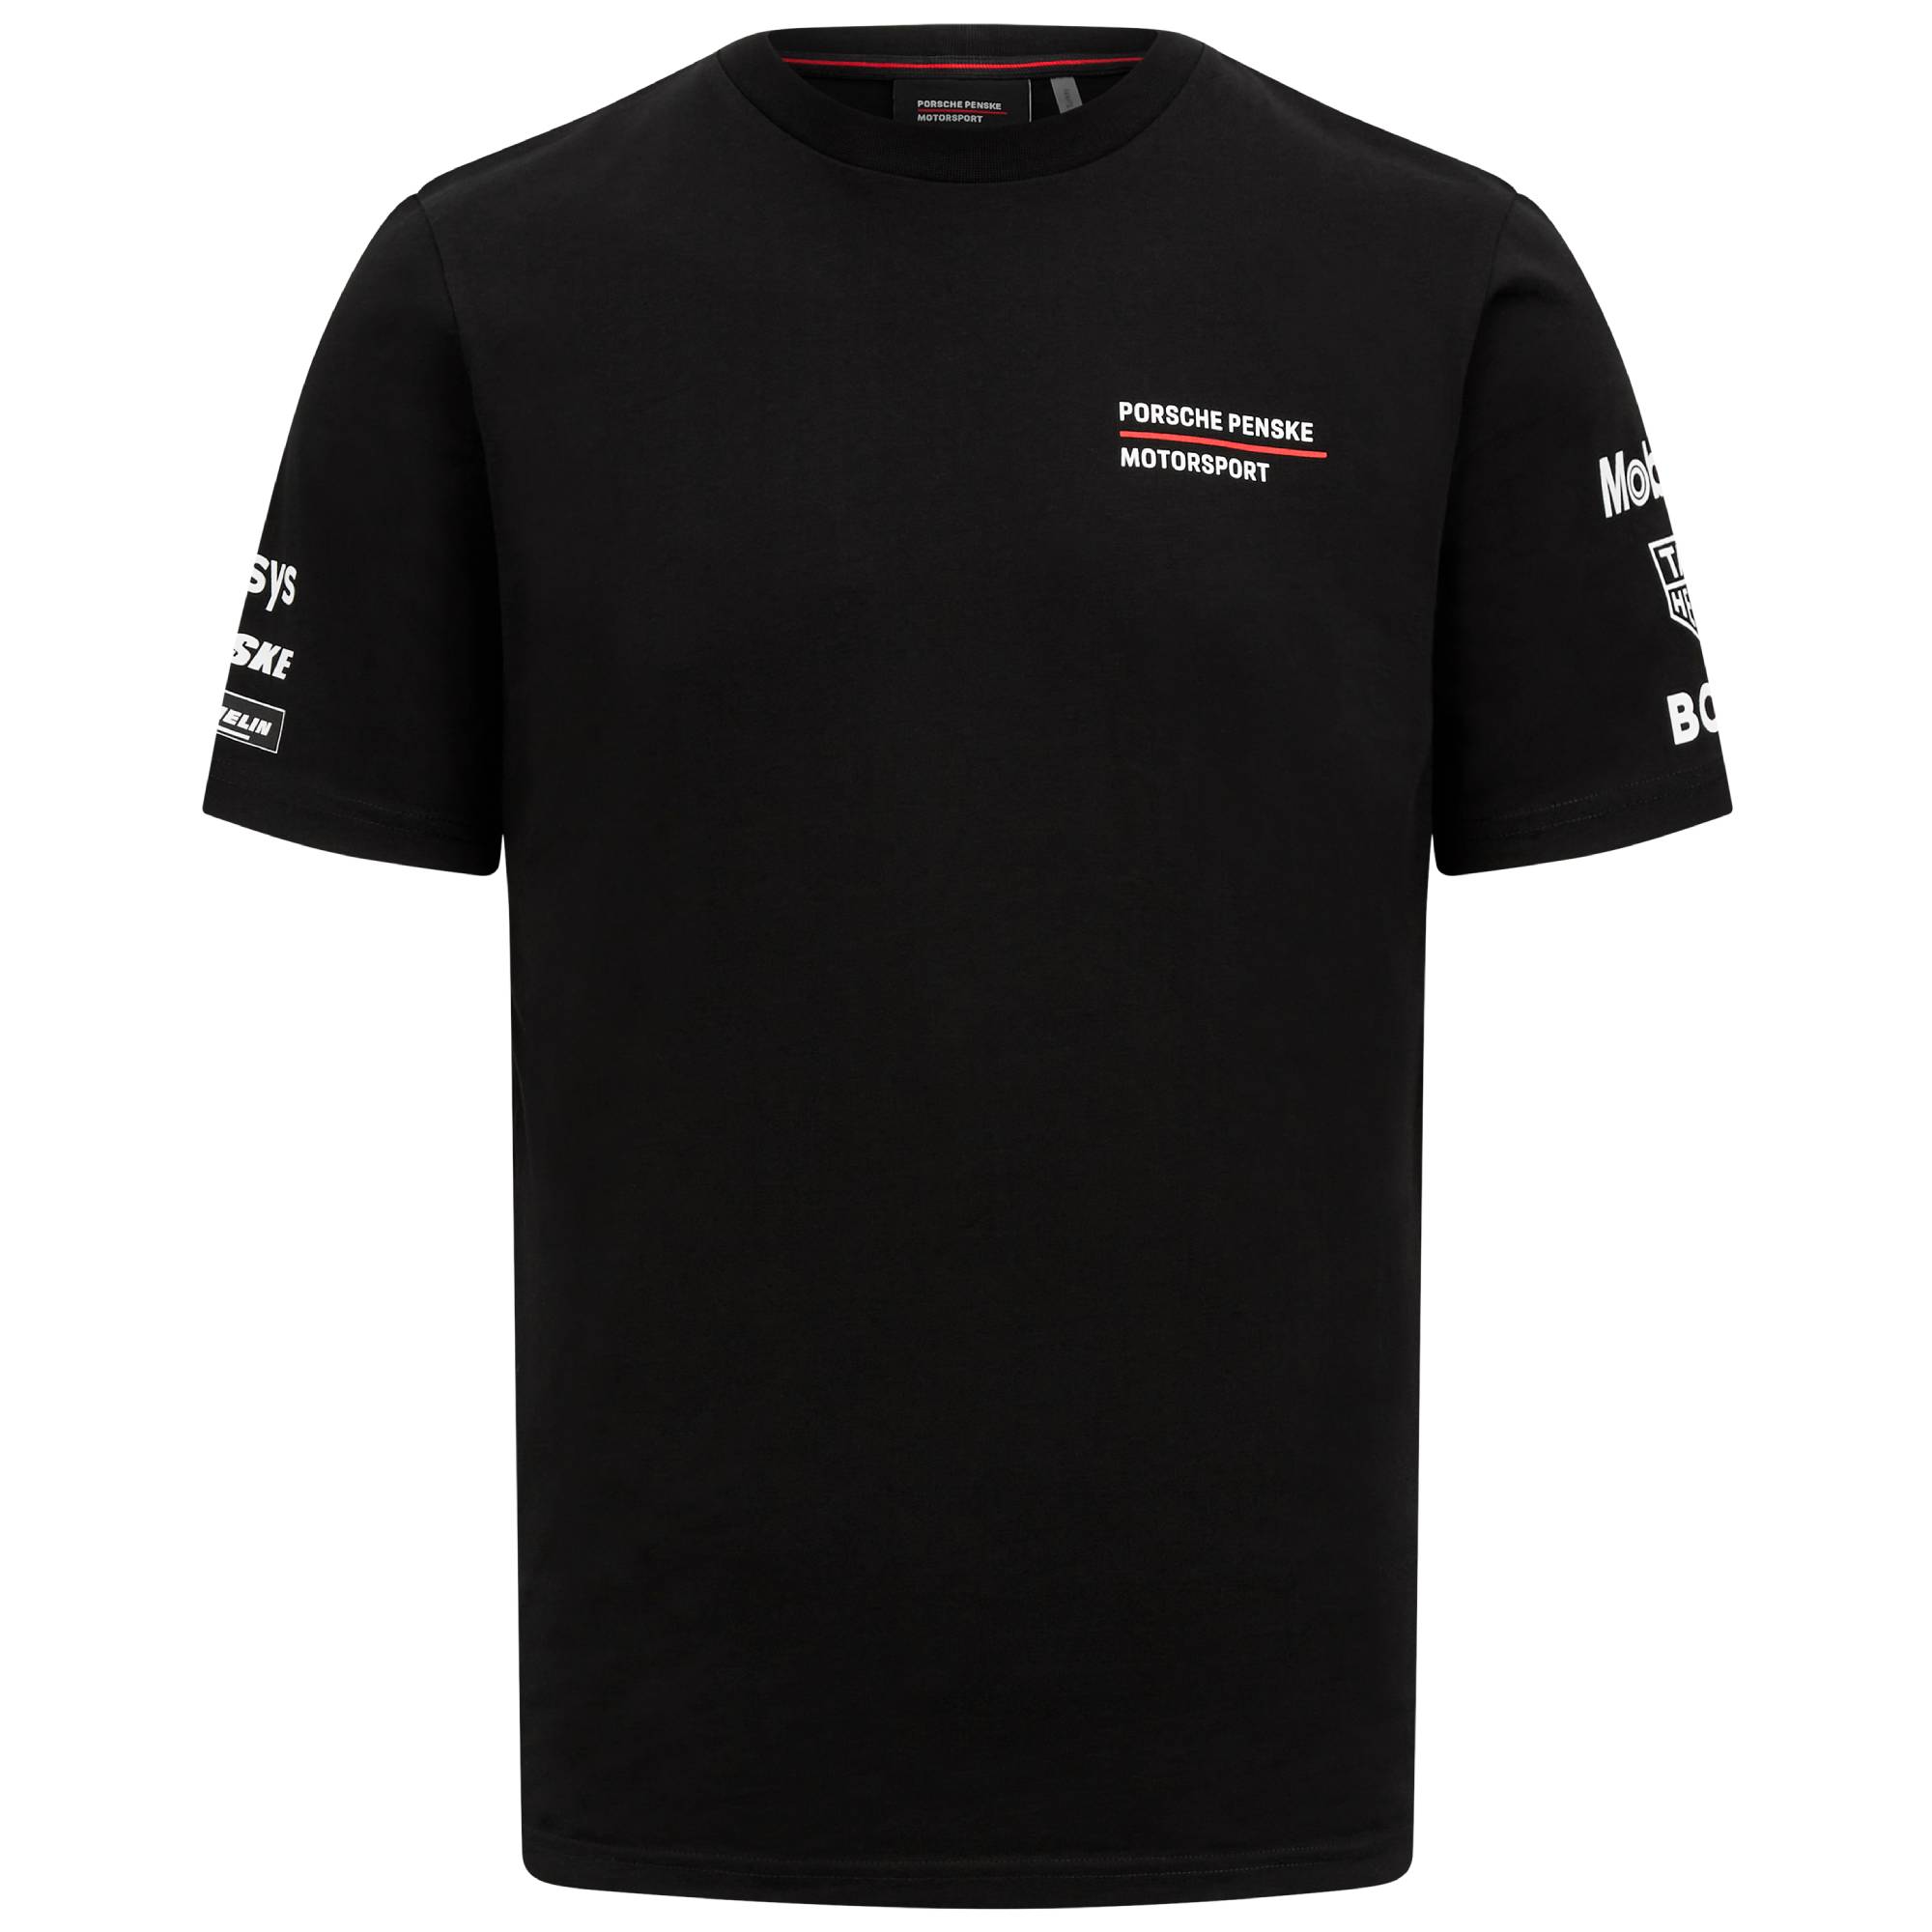 Porsche Motorsport T-Shirt "Penske Motorsport" - schwarz